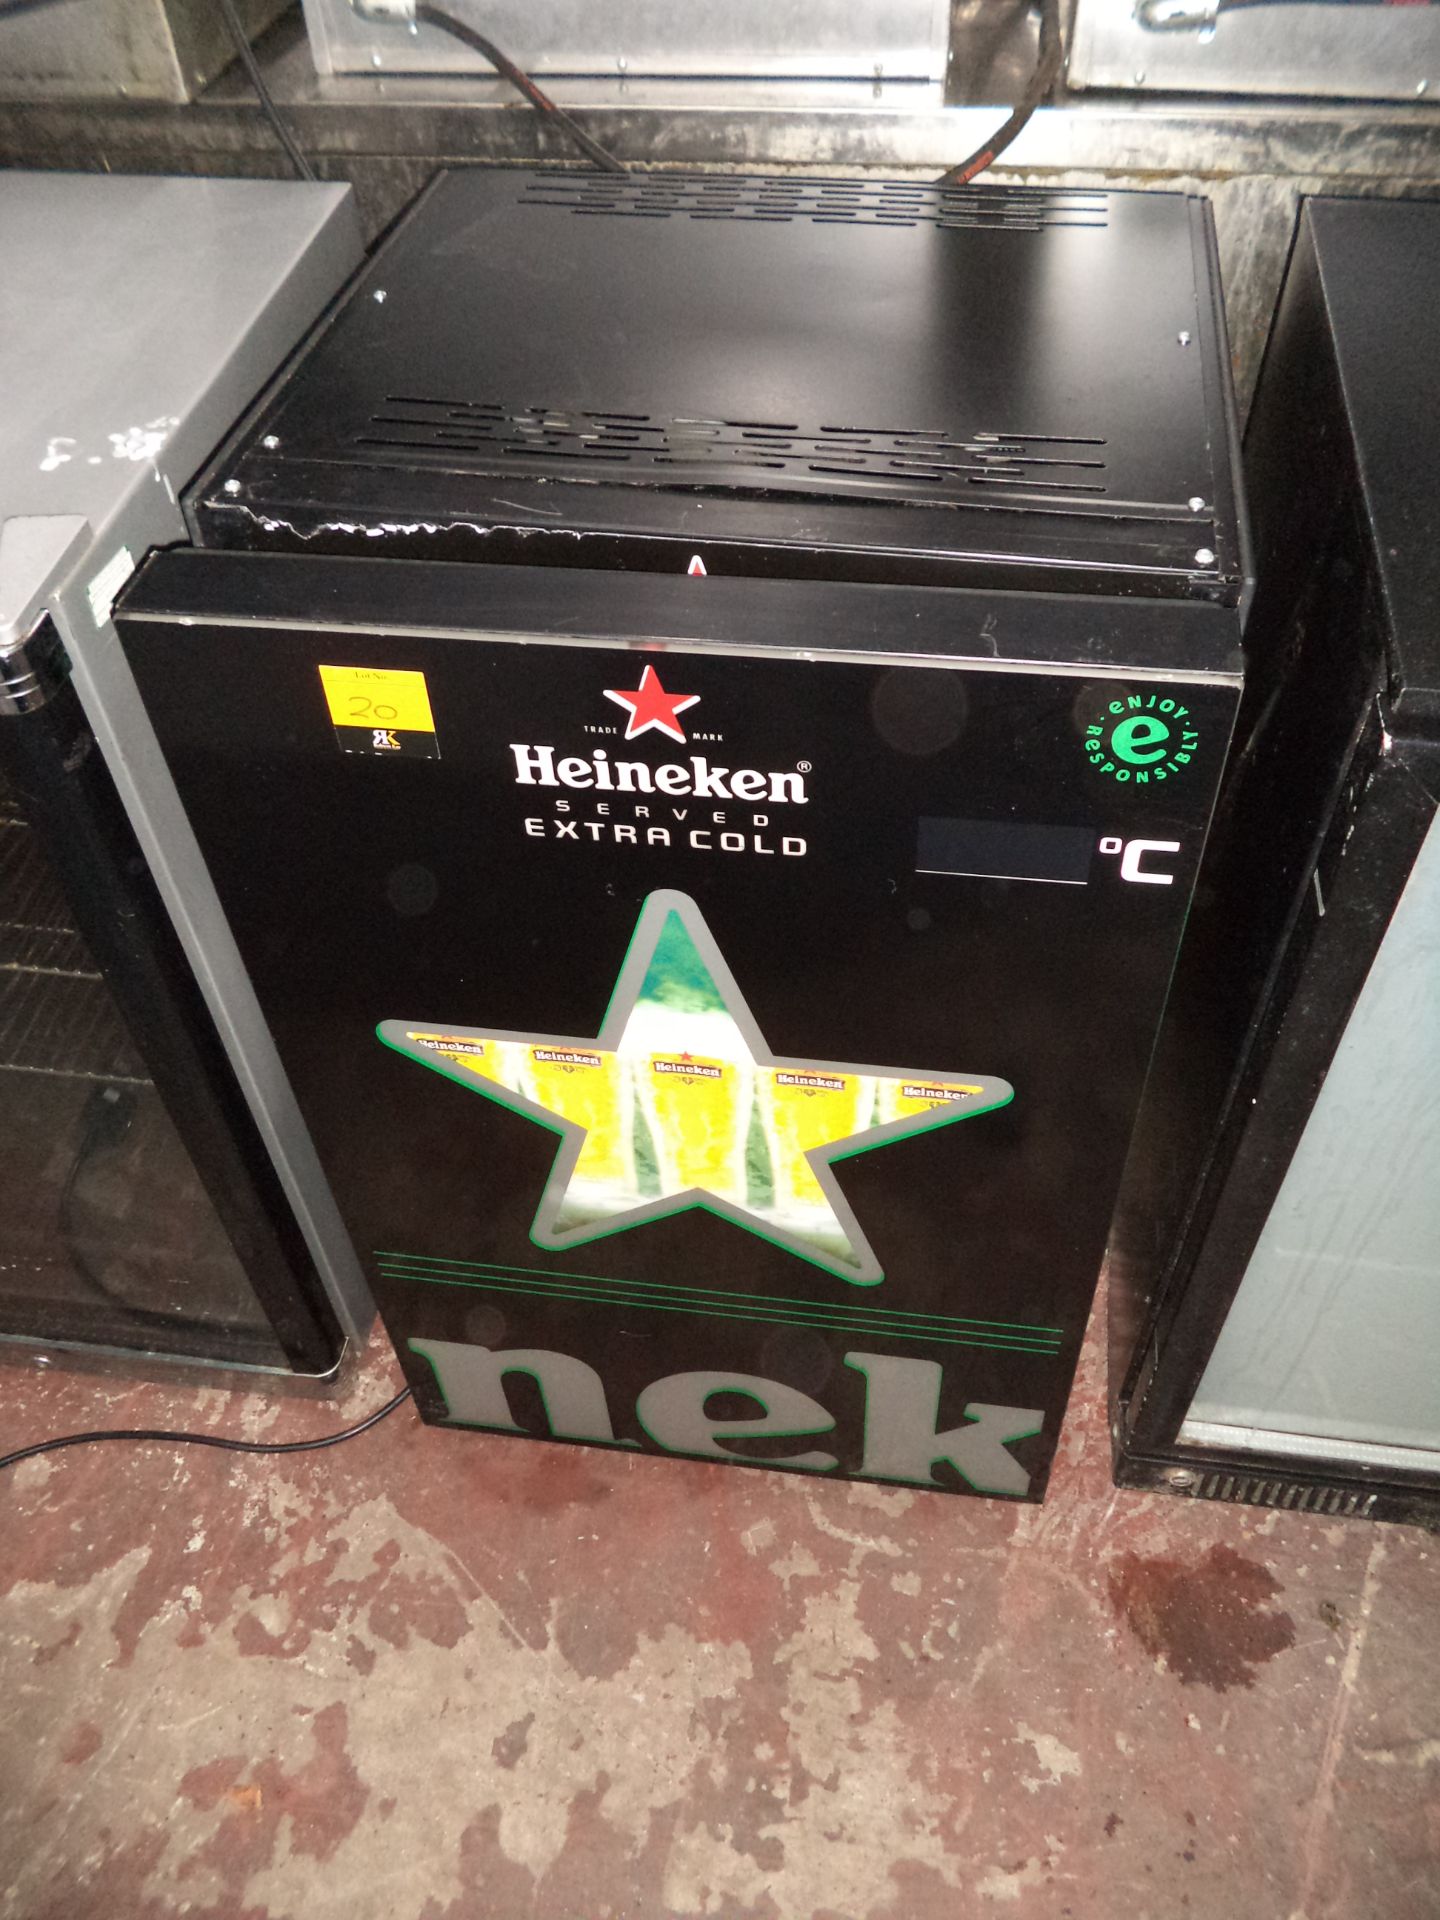 Heineken branded fridge IMPORTANT: Please remember goods successfully bid upon must be paid for